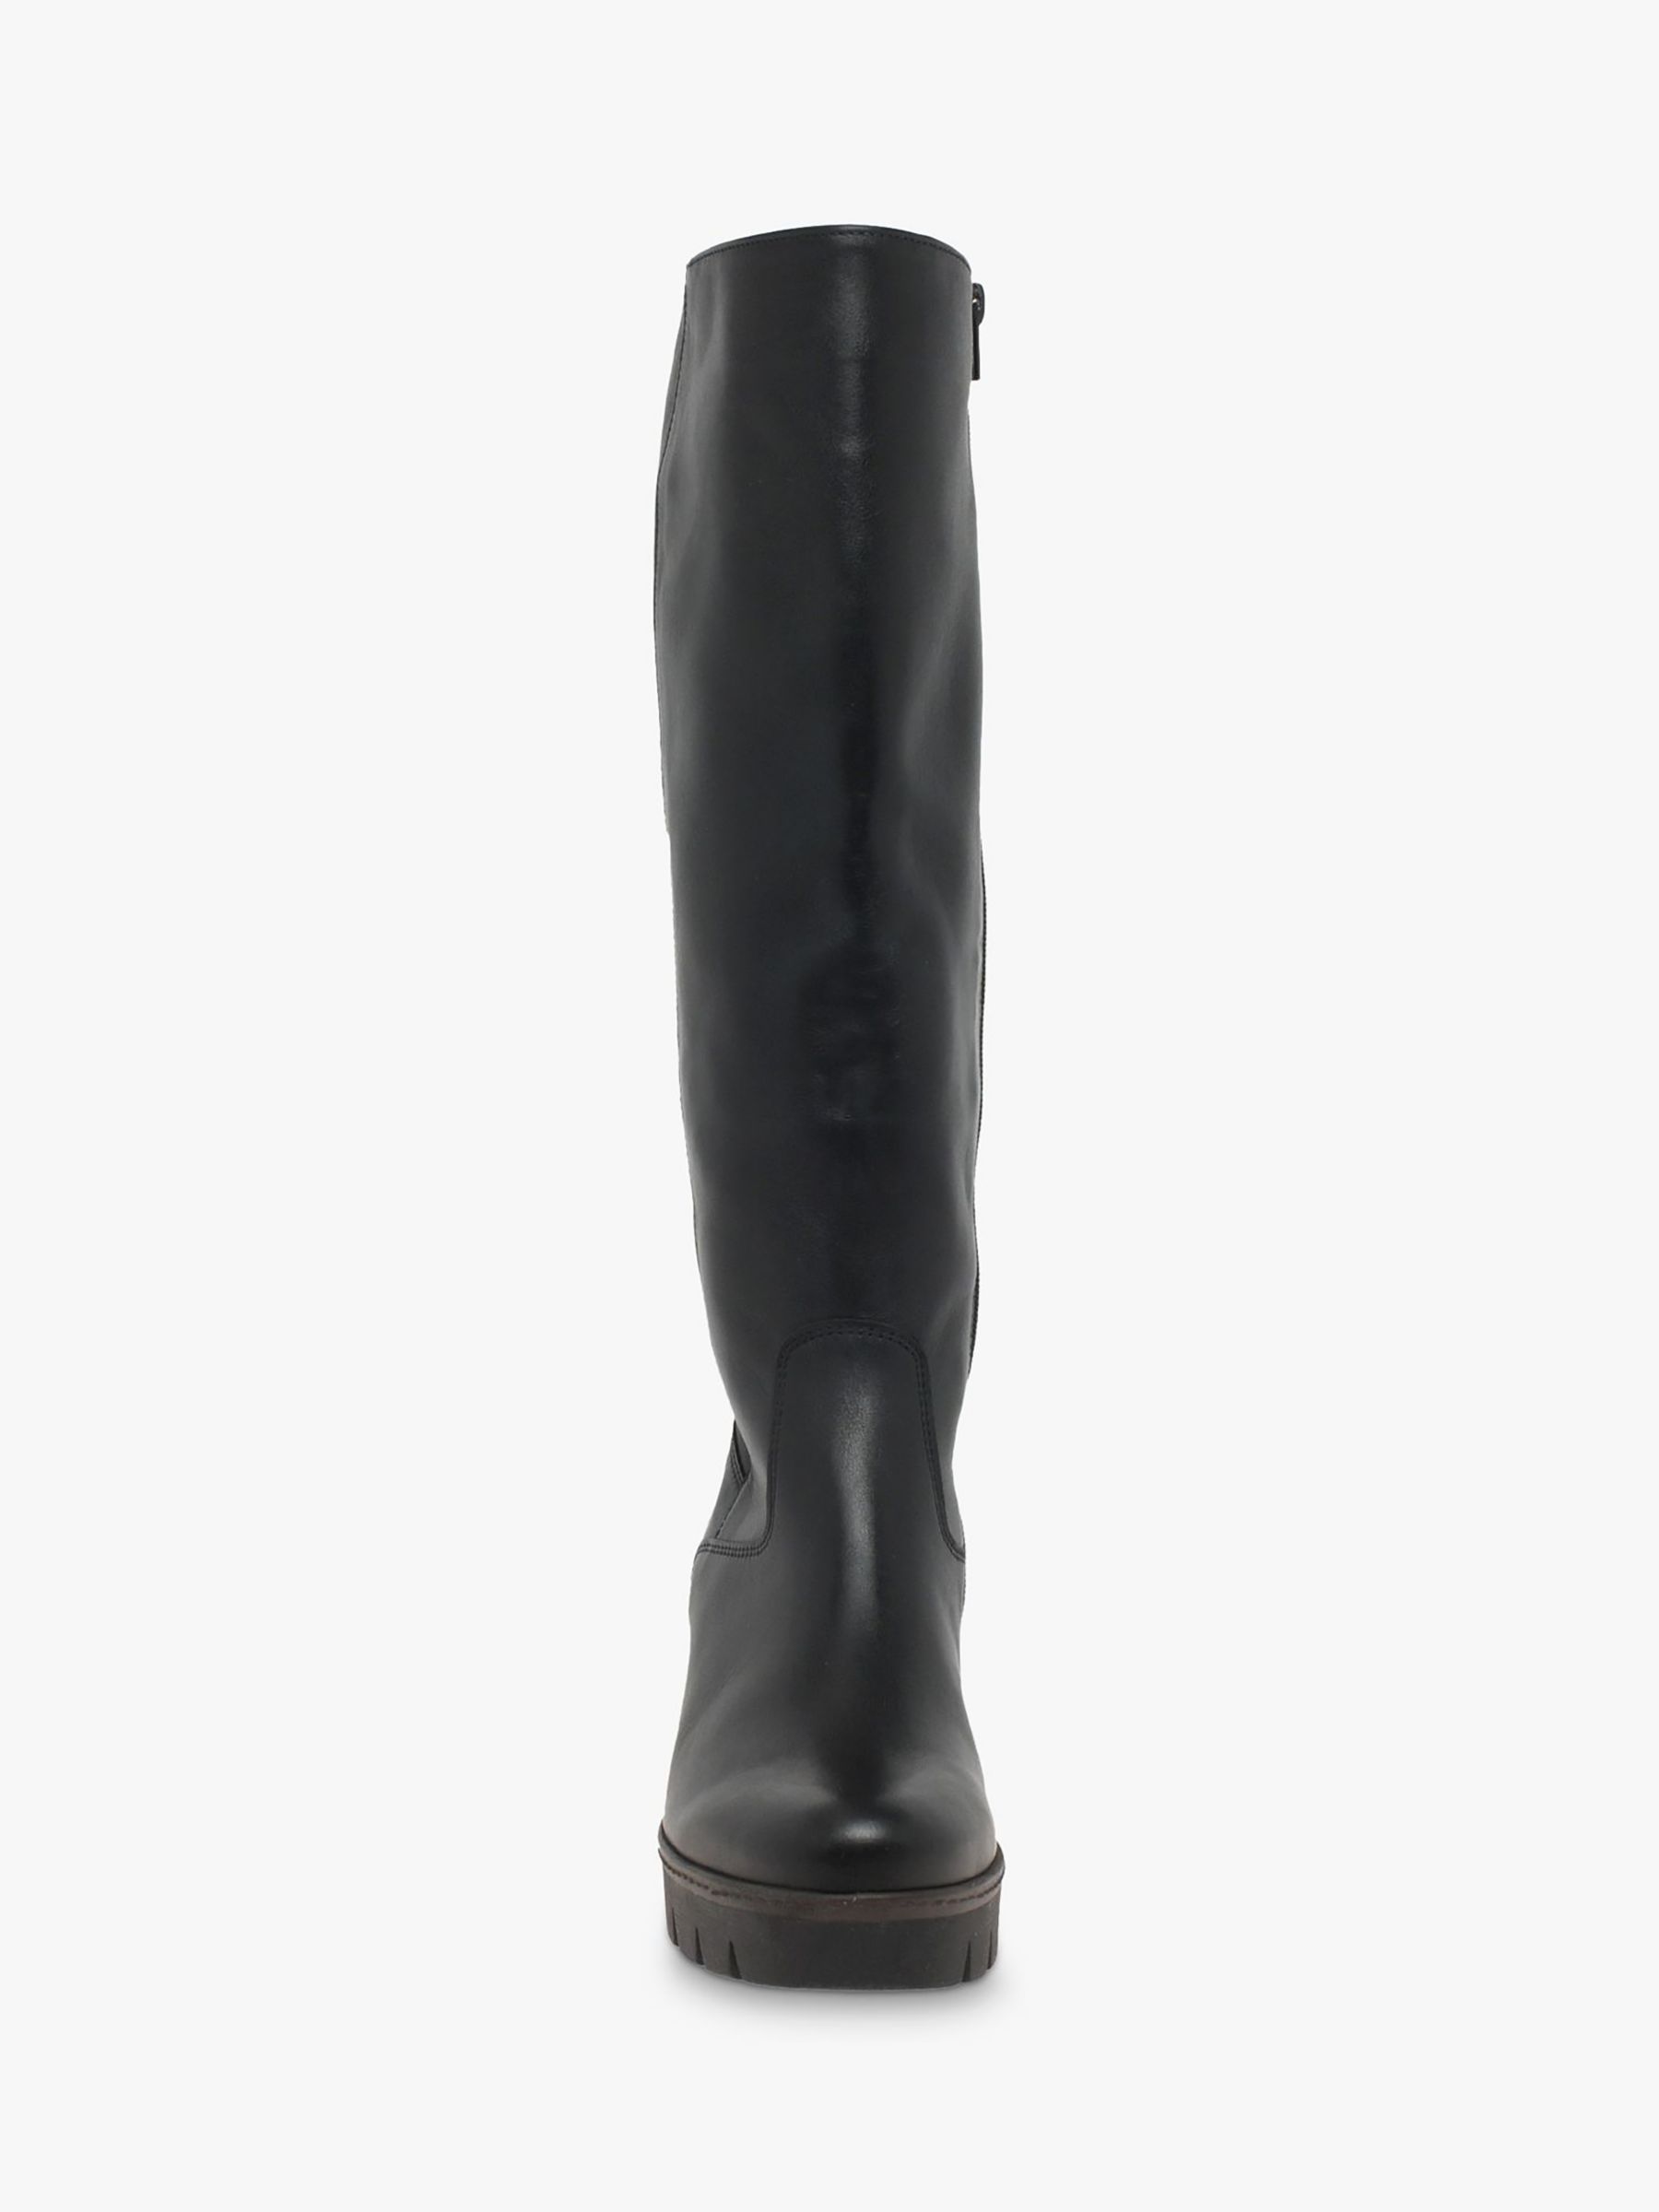 Unite Wedge Knee Boots (GAB36531) by Gabor